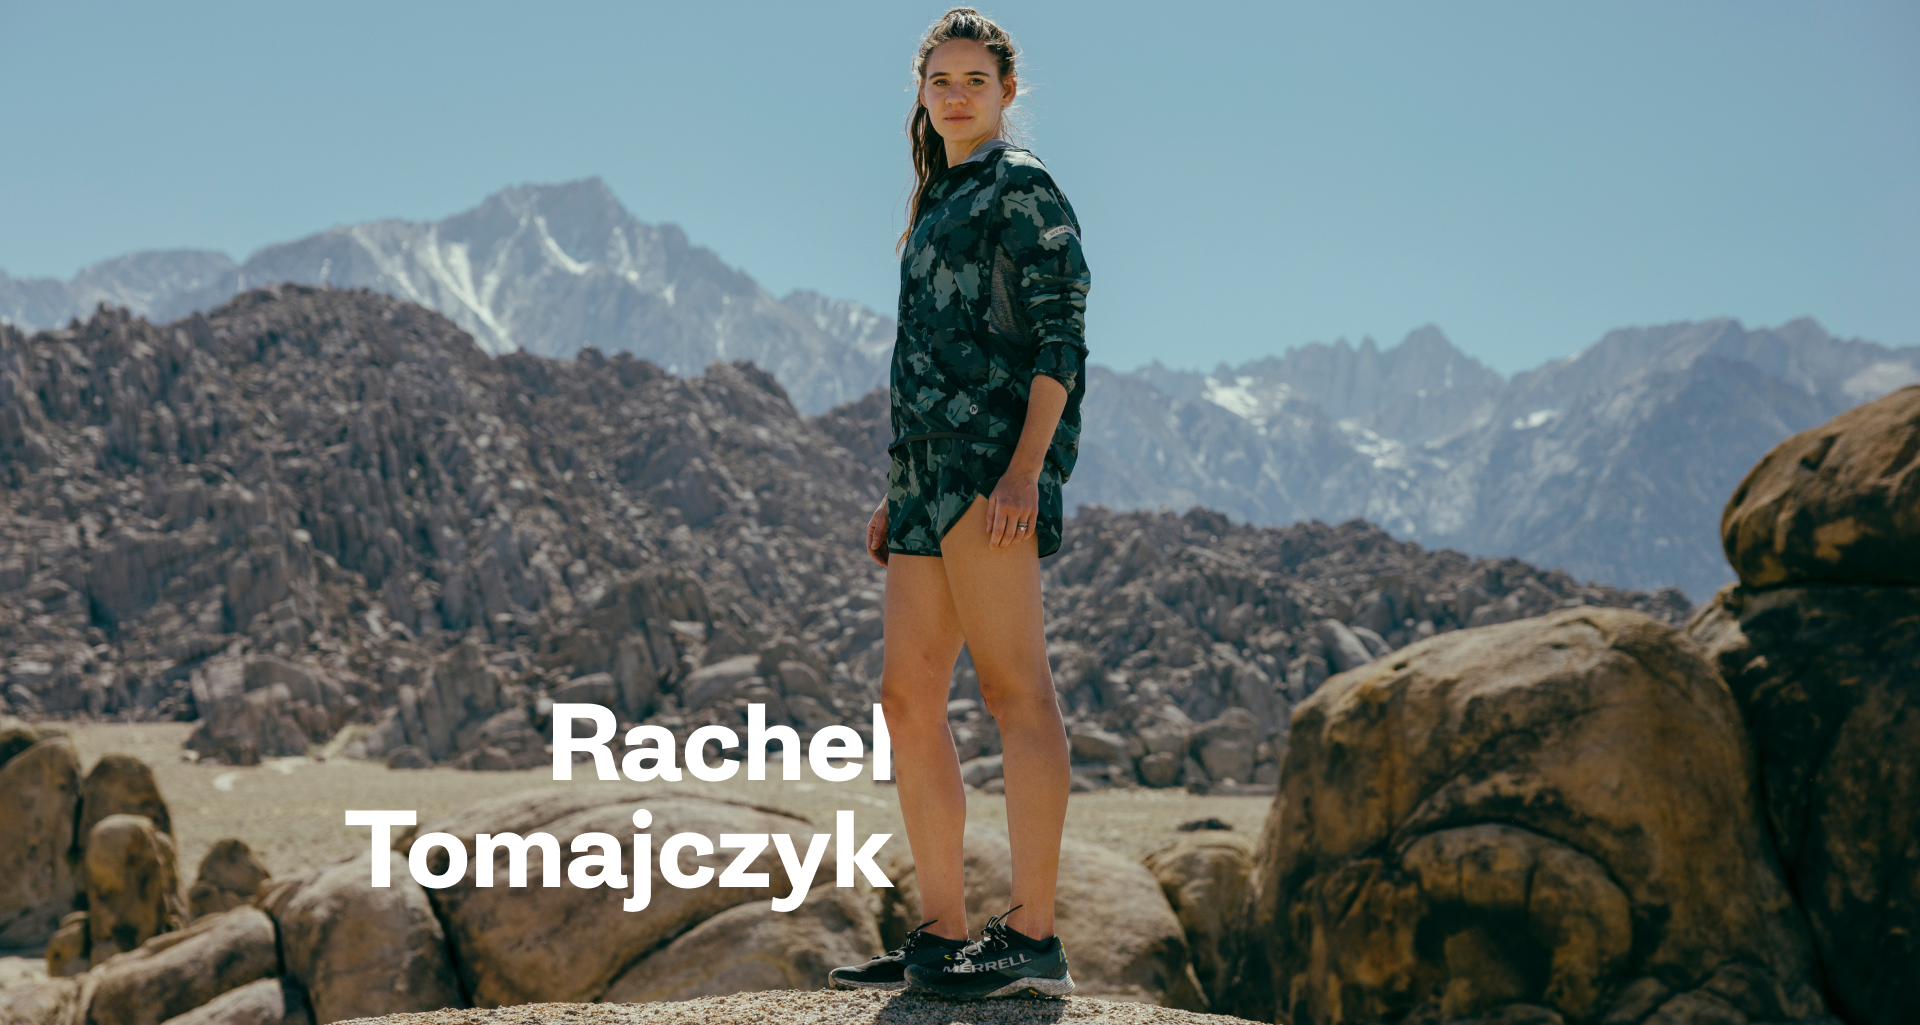 Rachel Tomajczyk standing in the mountains wearing Merrell gear, looking fast.